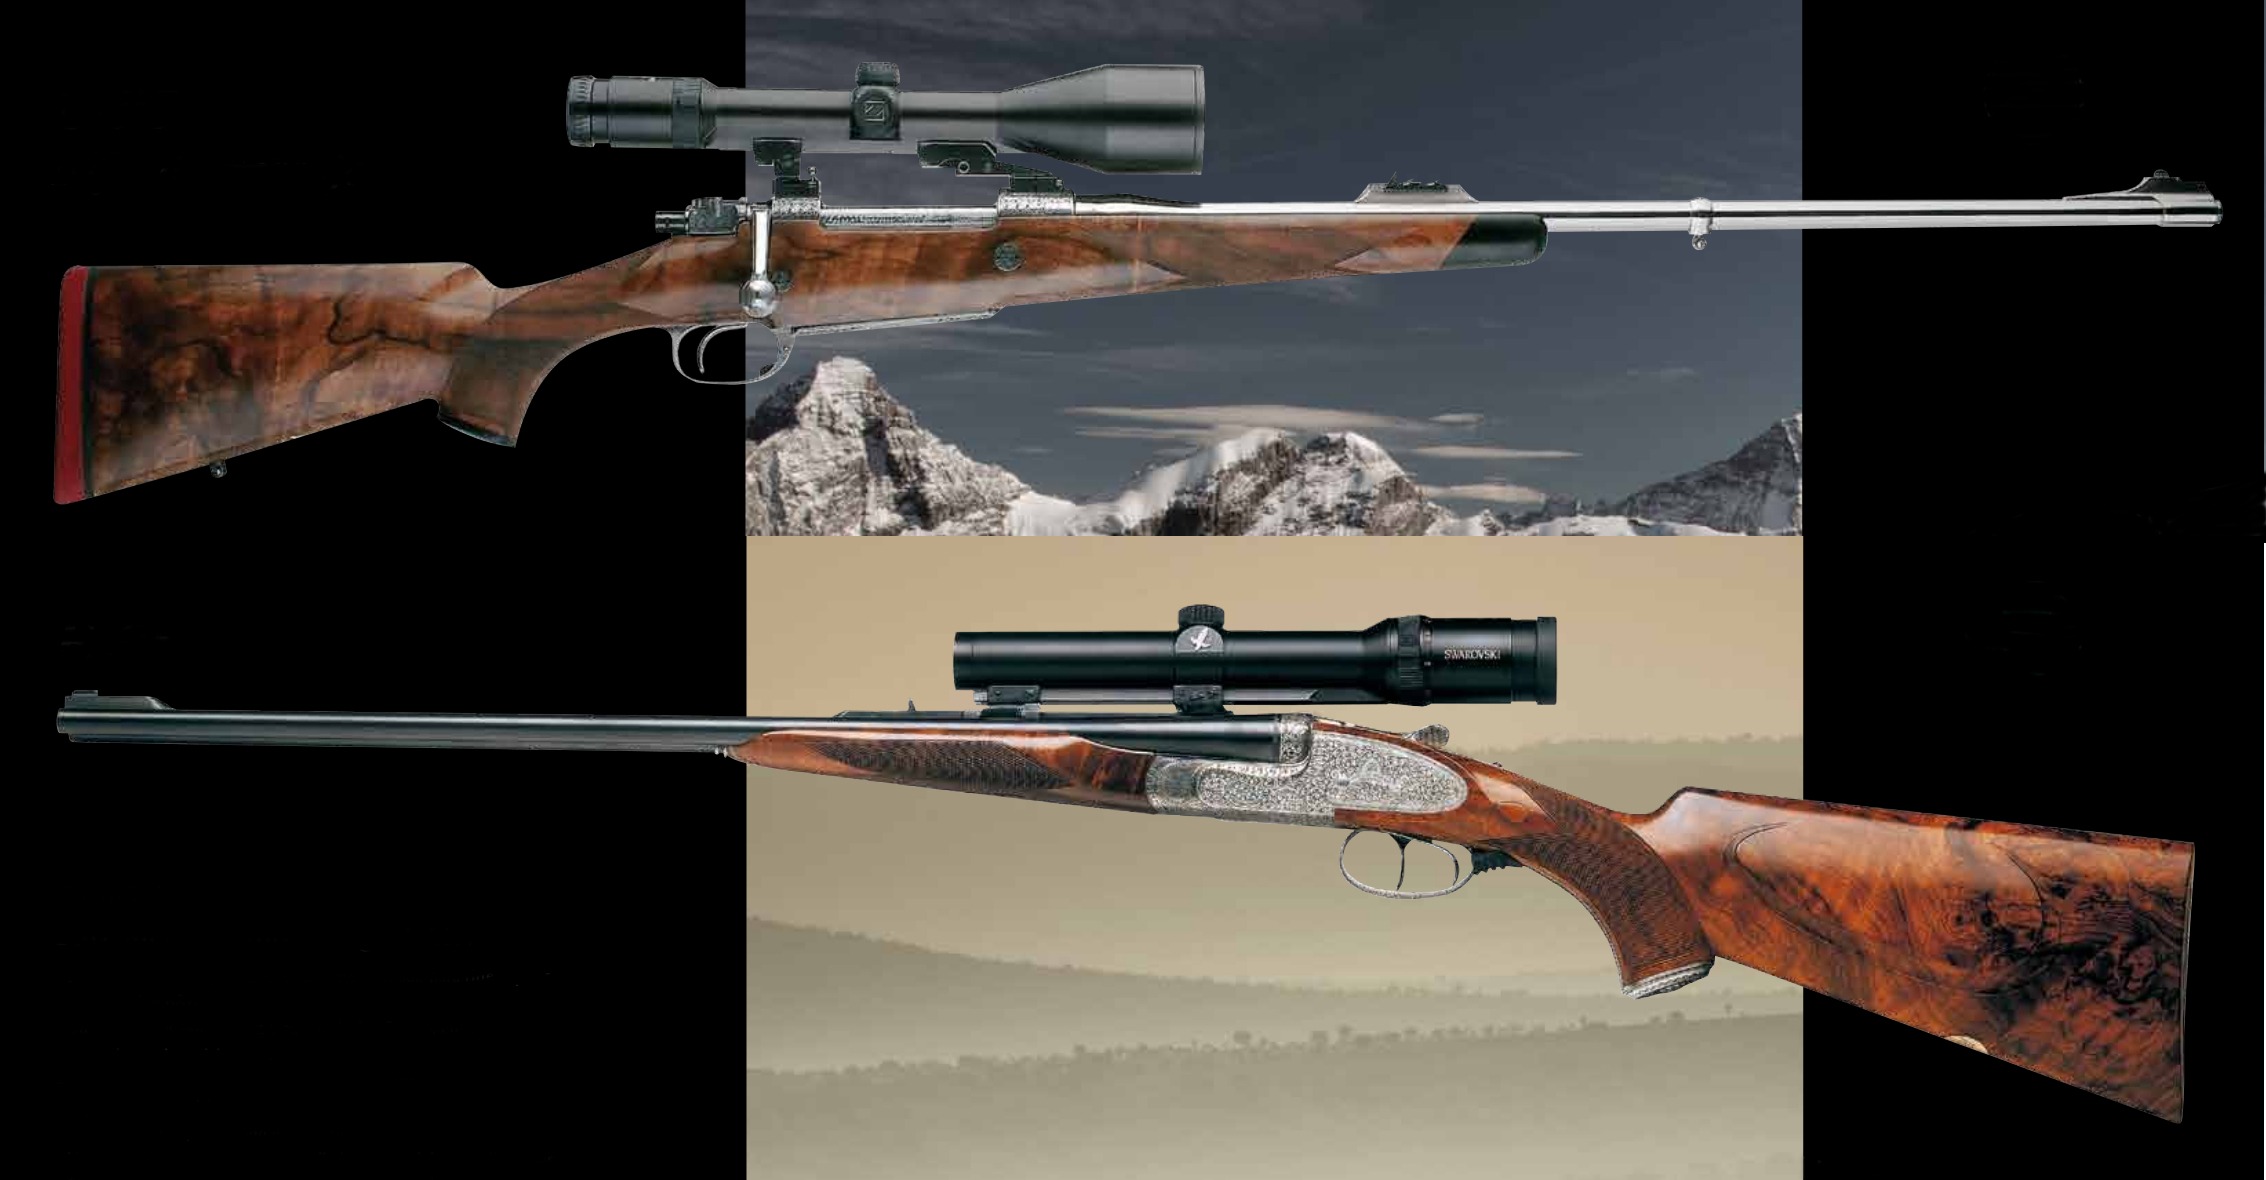 Grulla Armas sporting rifles